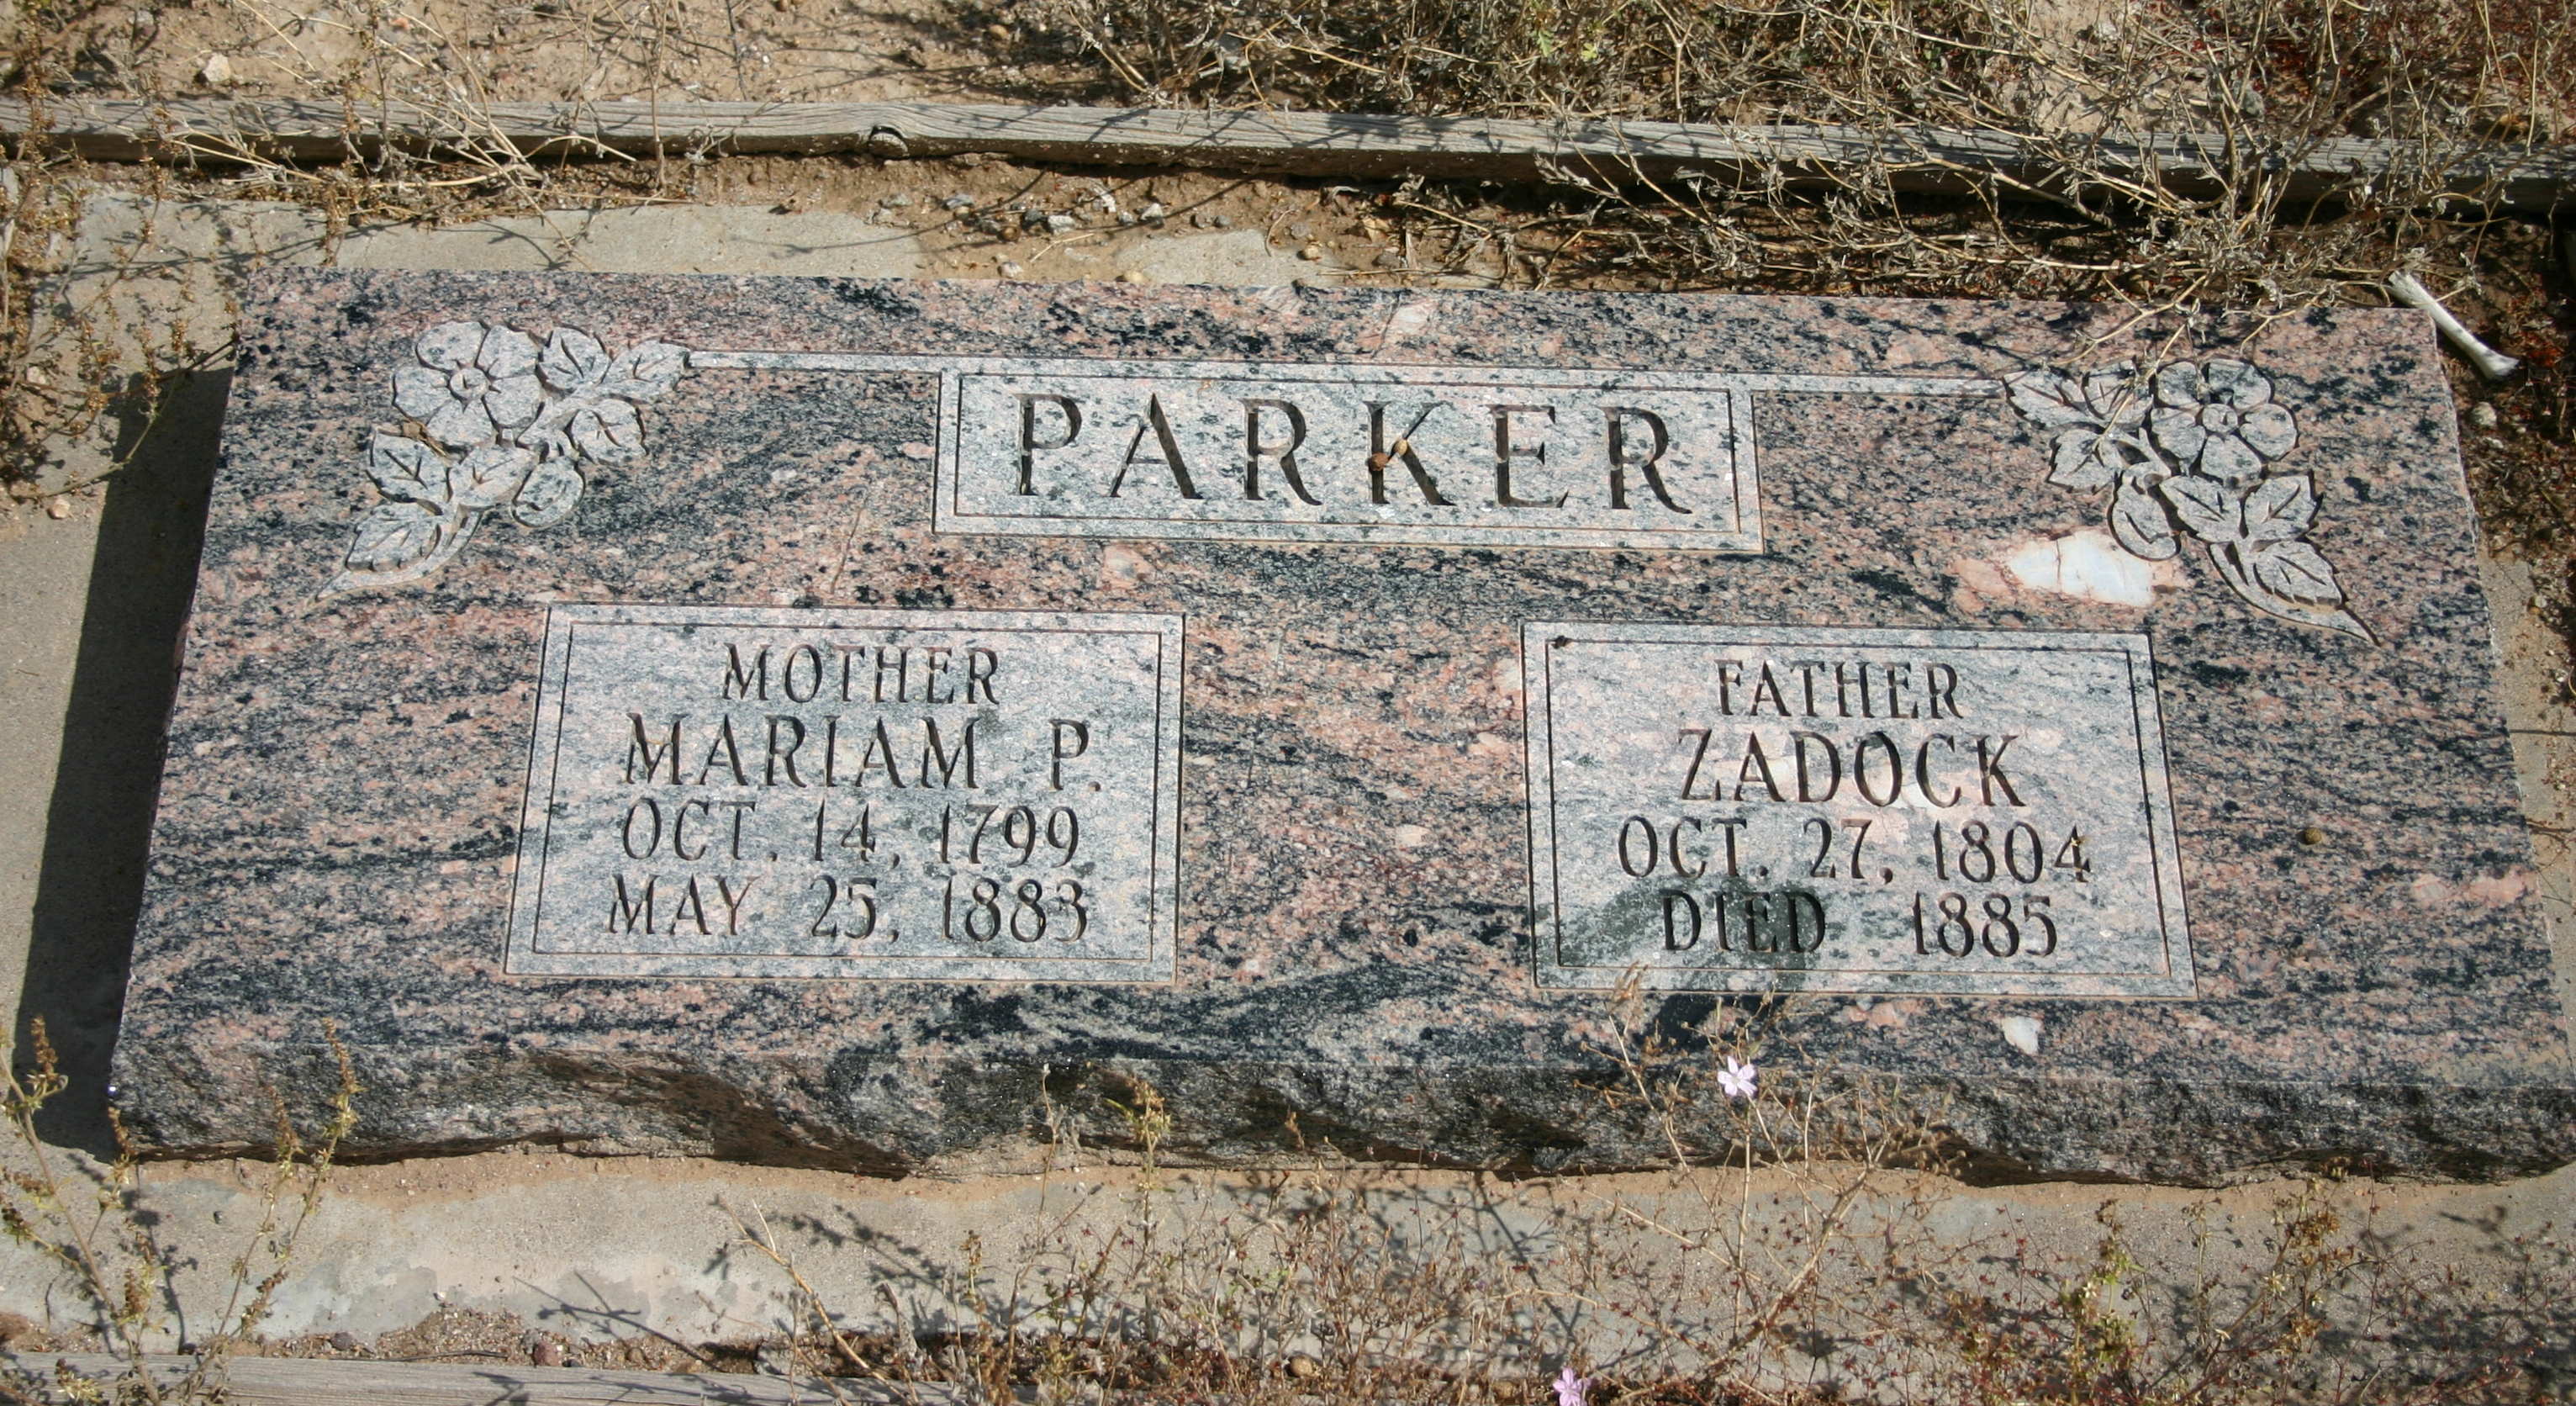 Zadock & Mariam P. Parker gravestone at the Hebron Cemetery